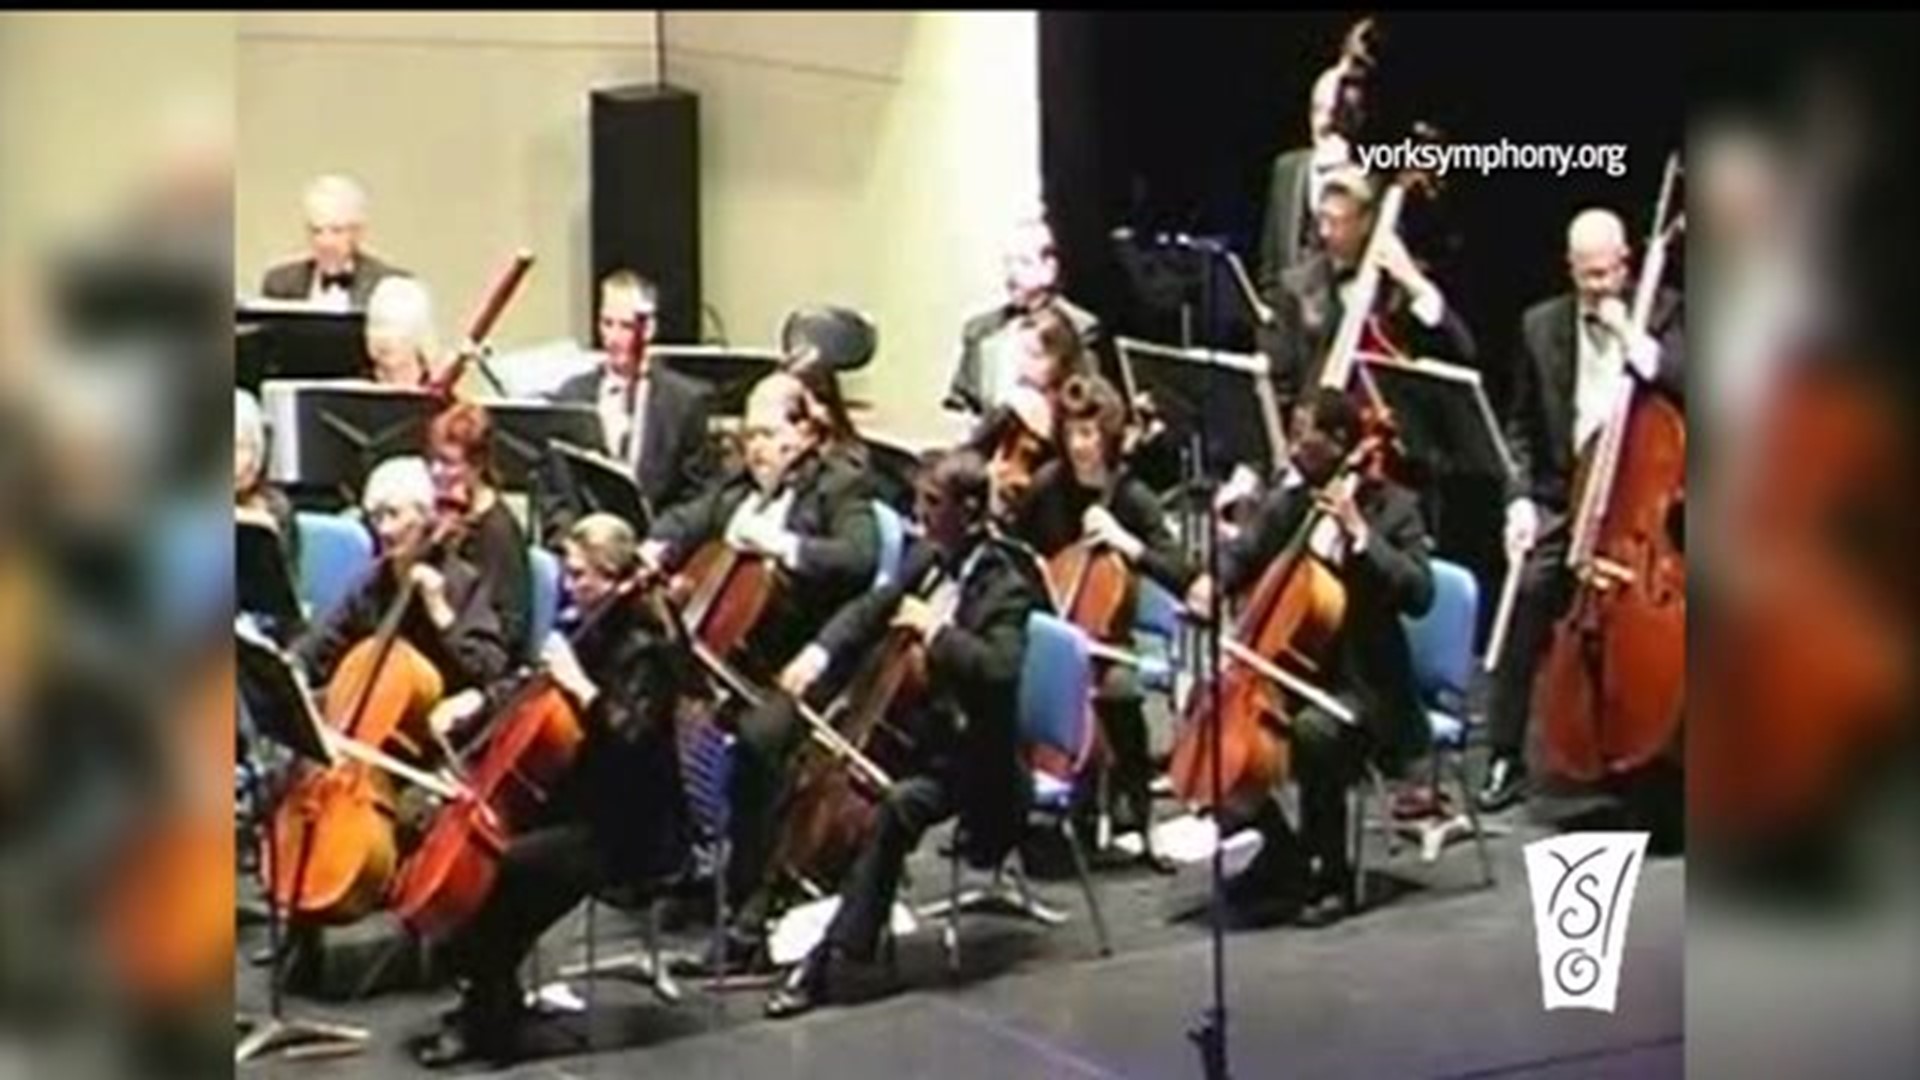 York Symphony Orchestra kicks off its season